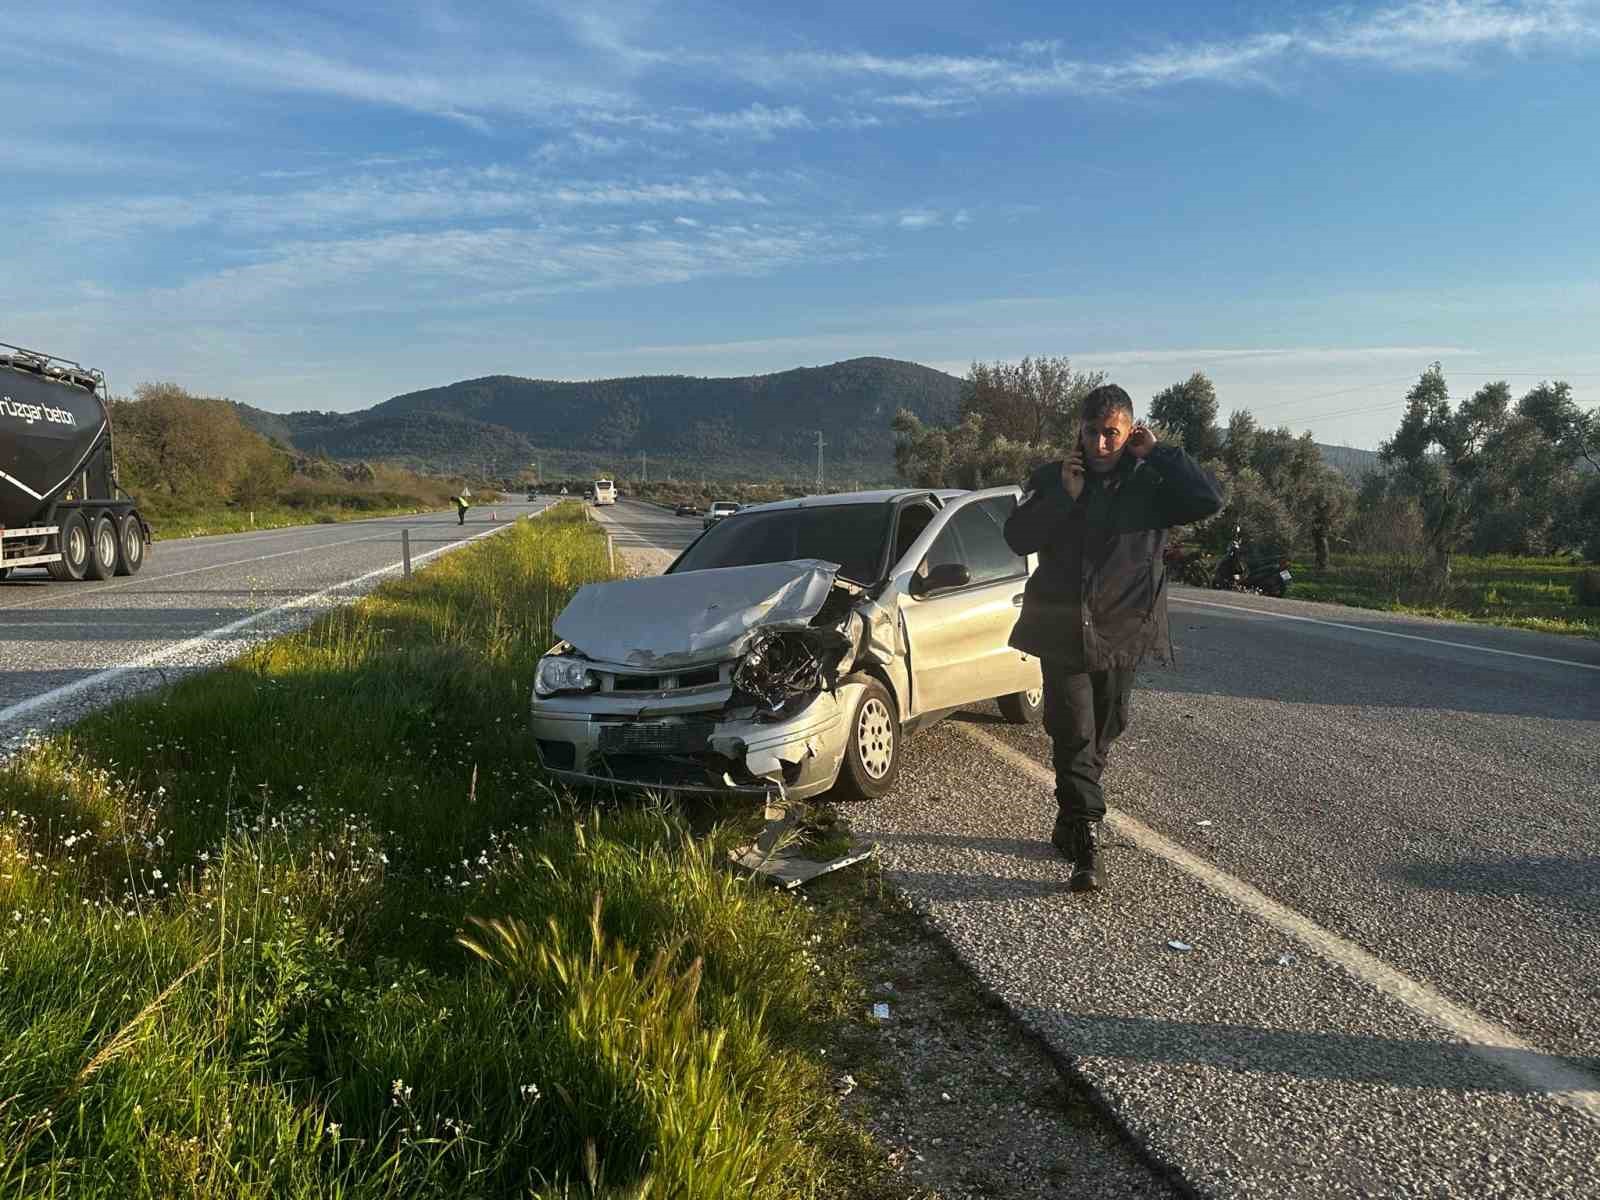 Milas-Söke Karayolu’nda feci kaza: 1’i çocuk 5 yaralı
